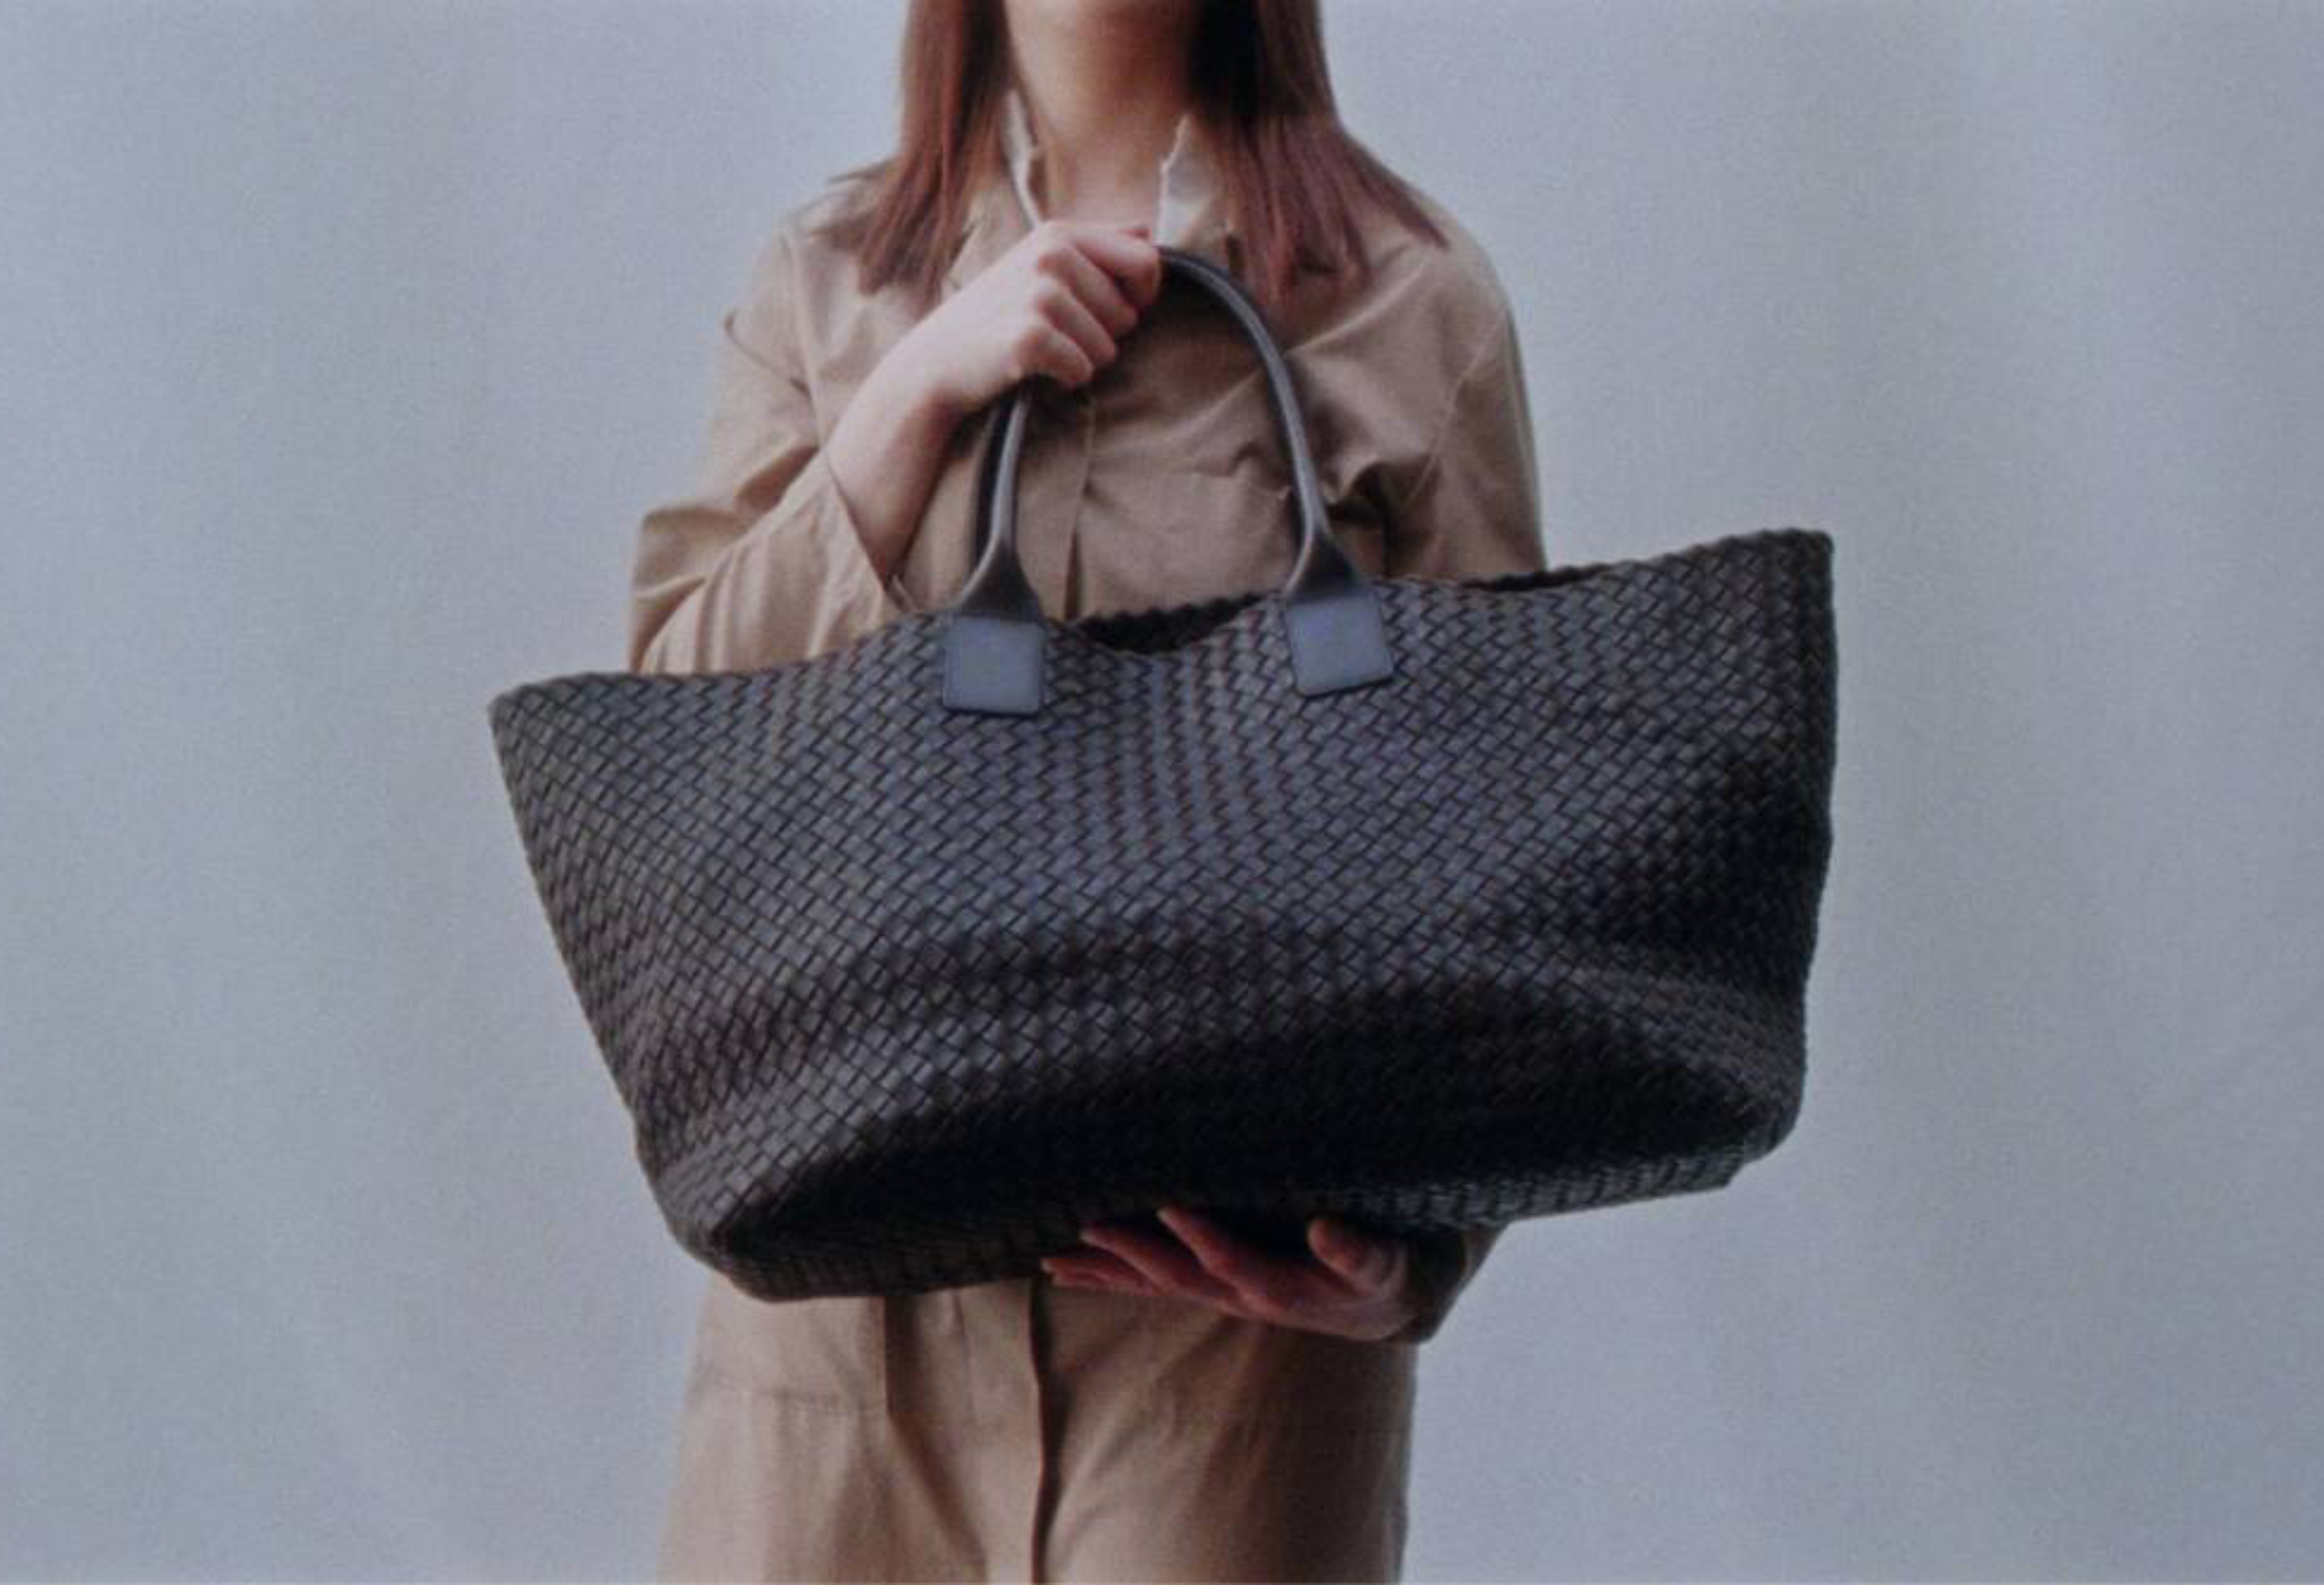 Bottega Veneta bags: Living legends of craftsmanship